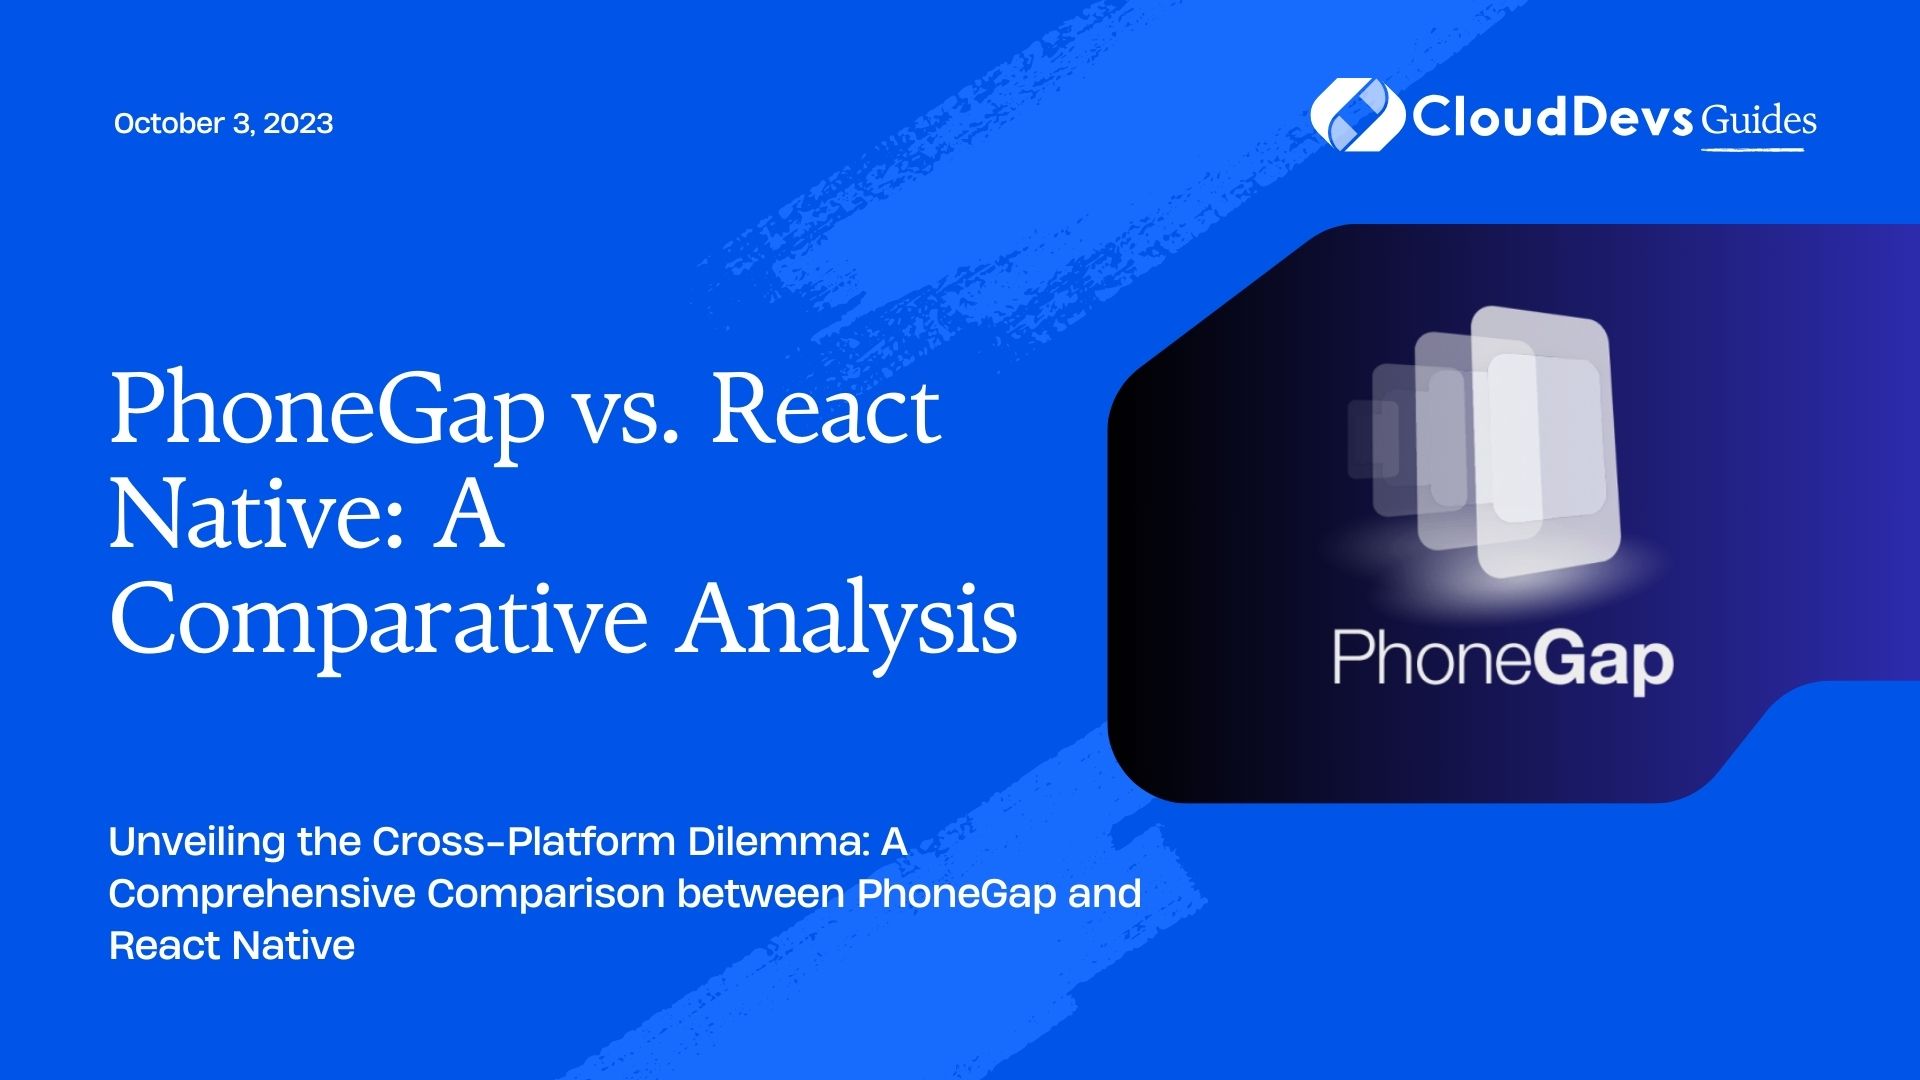 PhoneGap vs. React Native: A Comparative Analysis